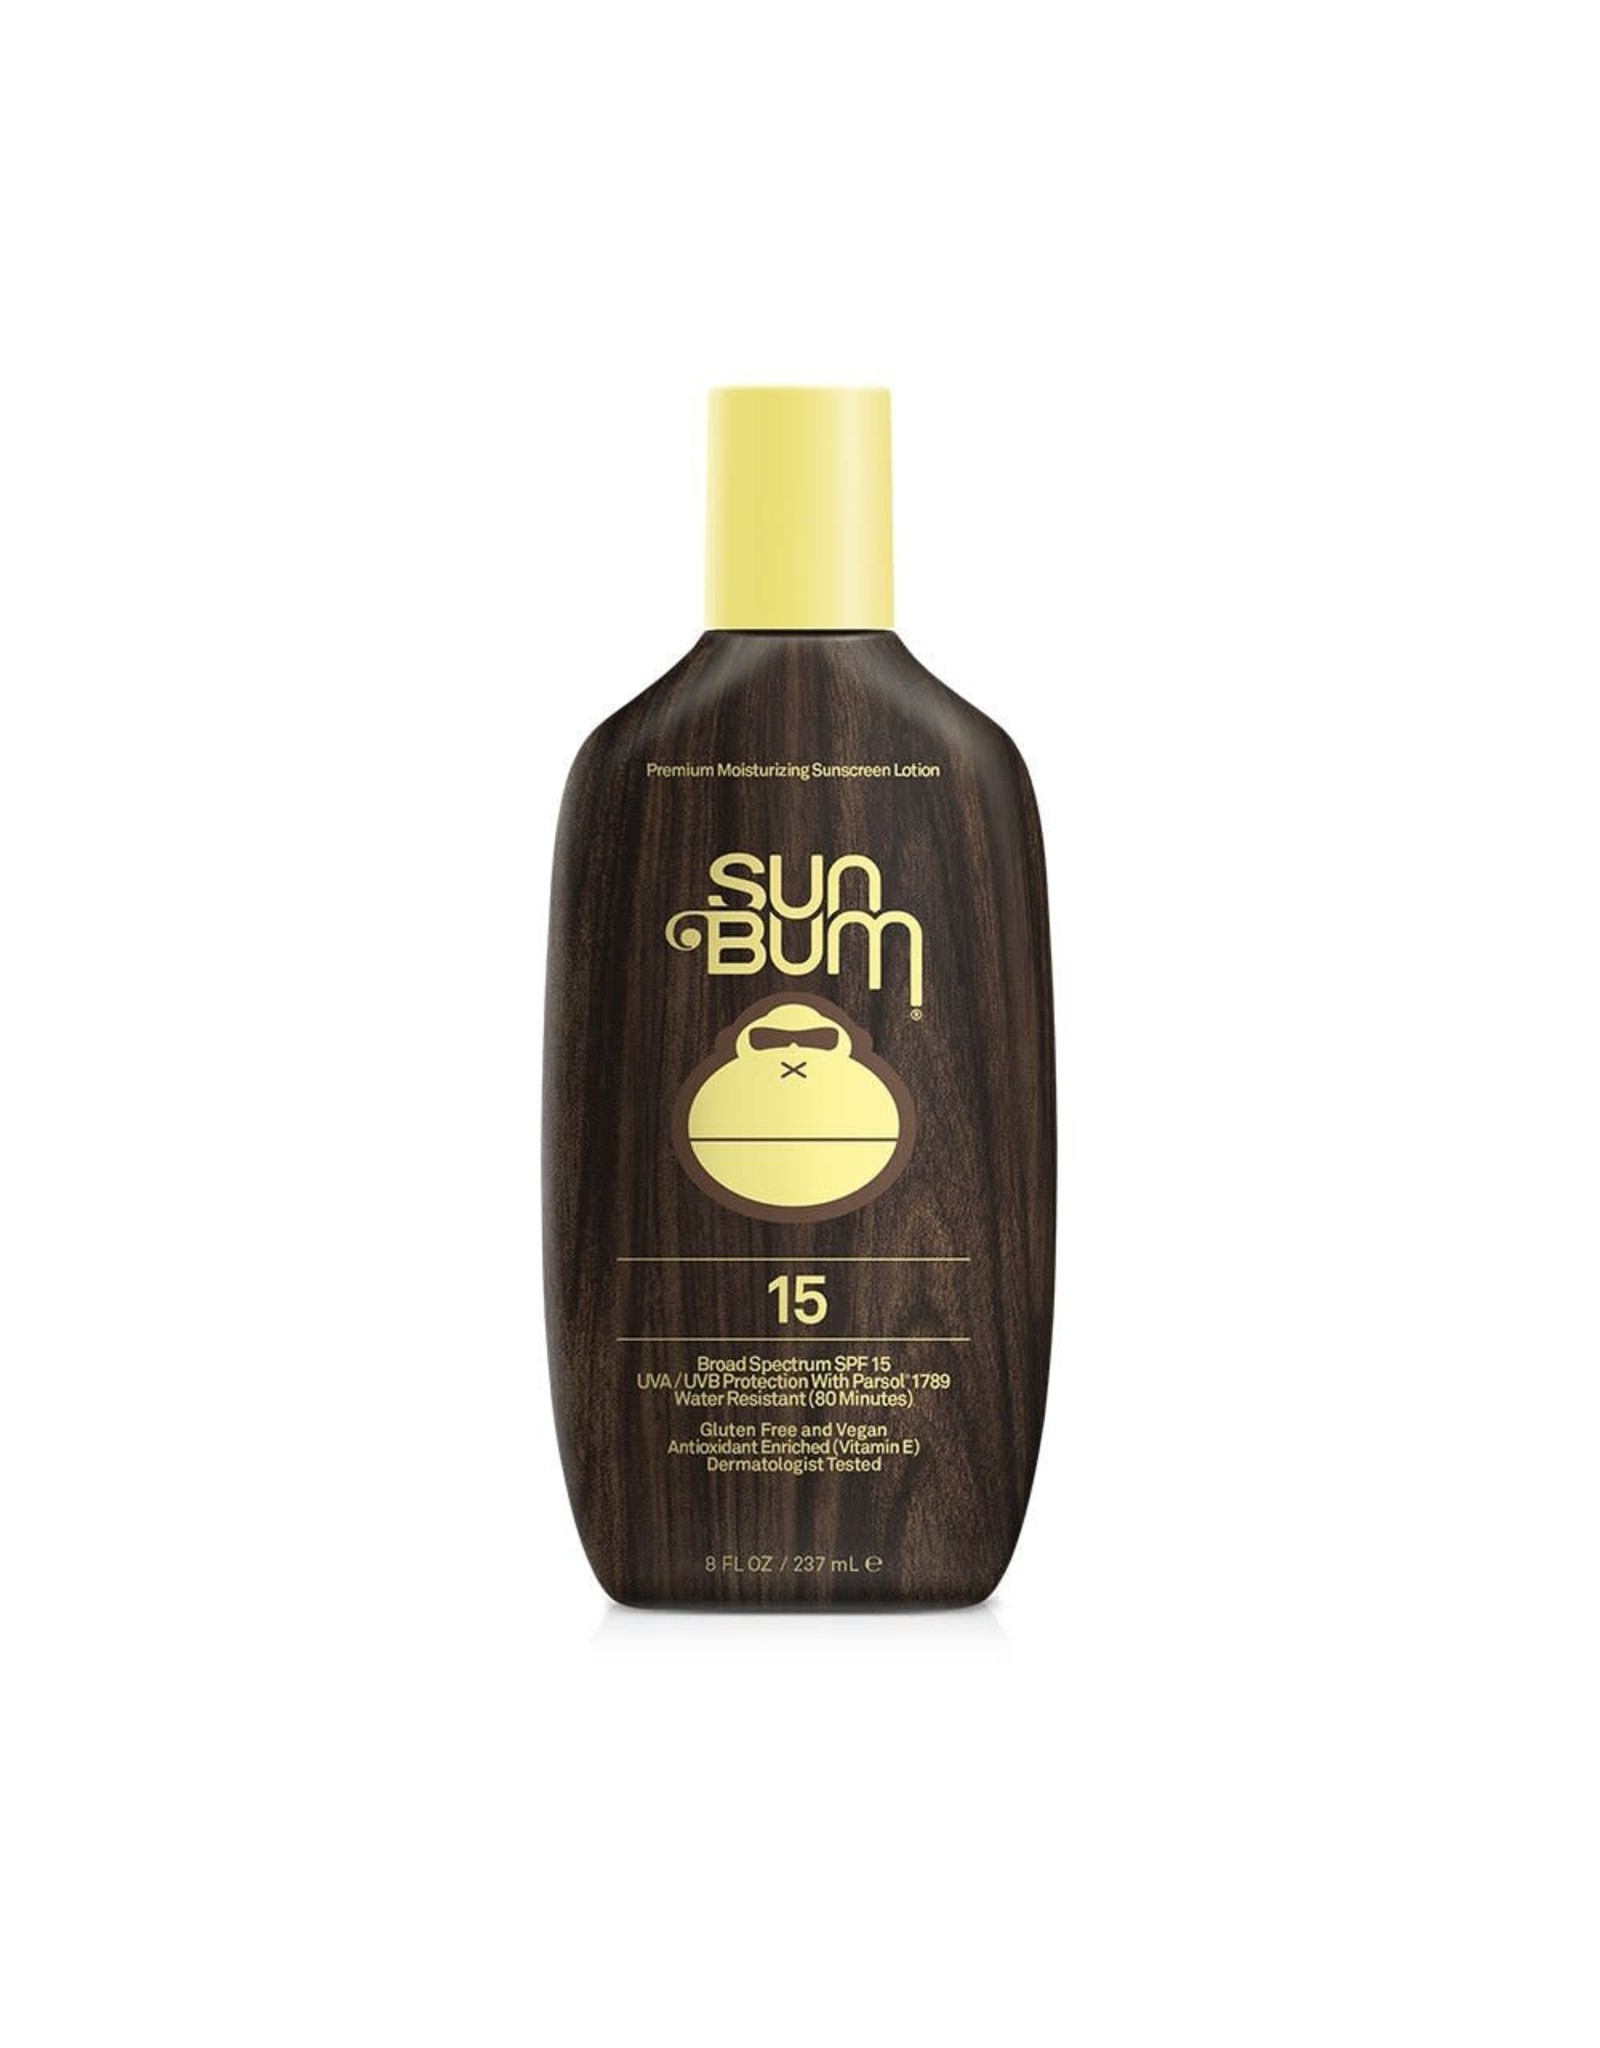 Sun Bum Sun Bum Original SPF 15 Sunscreen Lotion 8 oz.